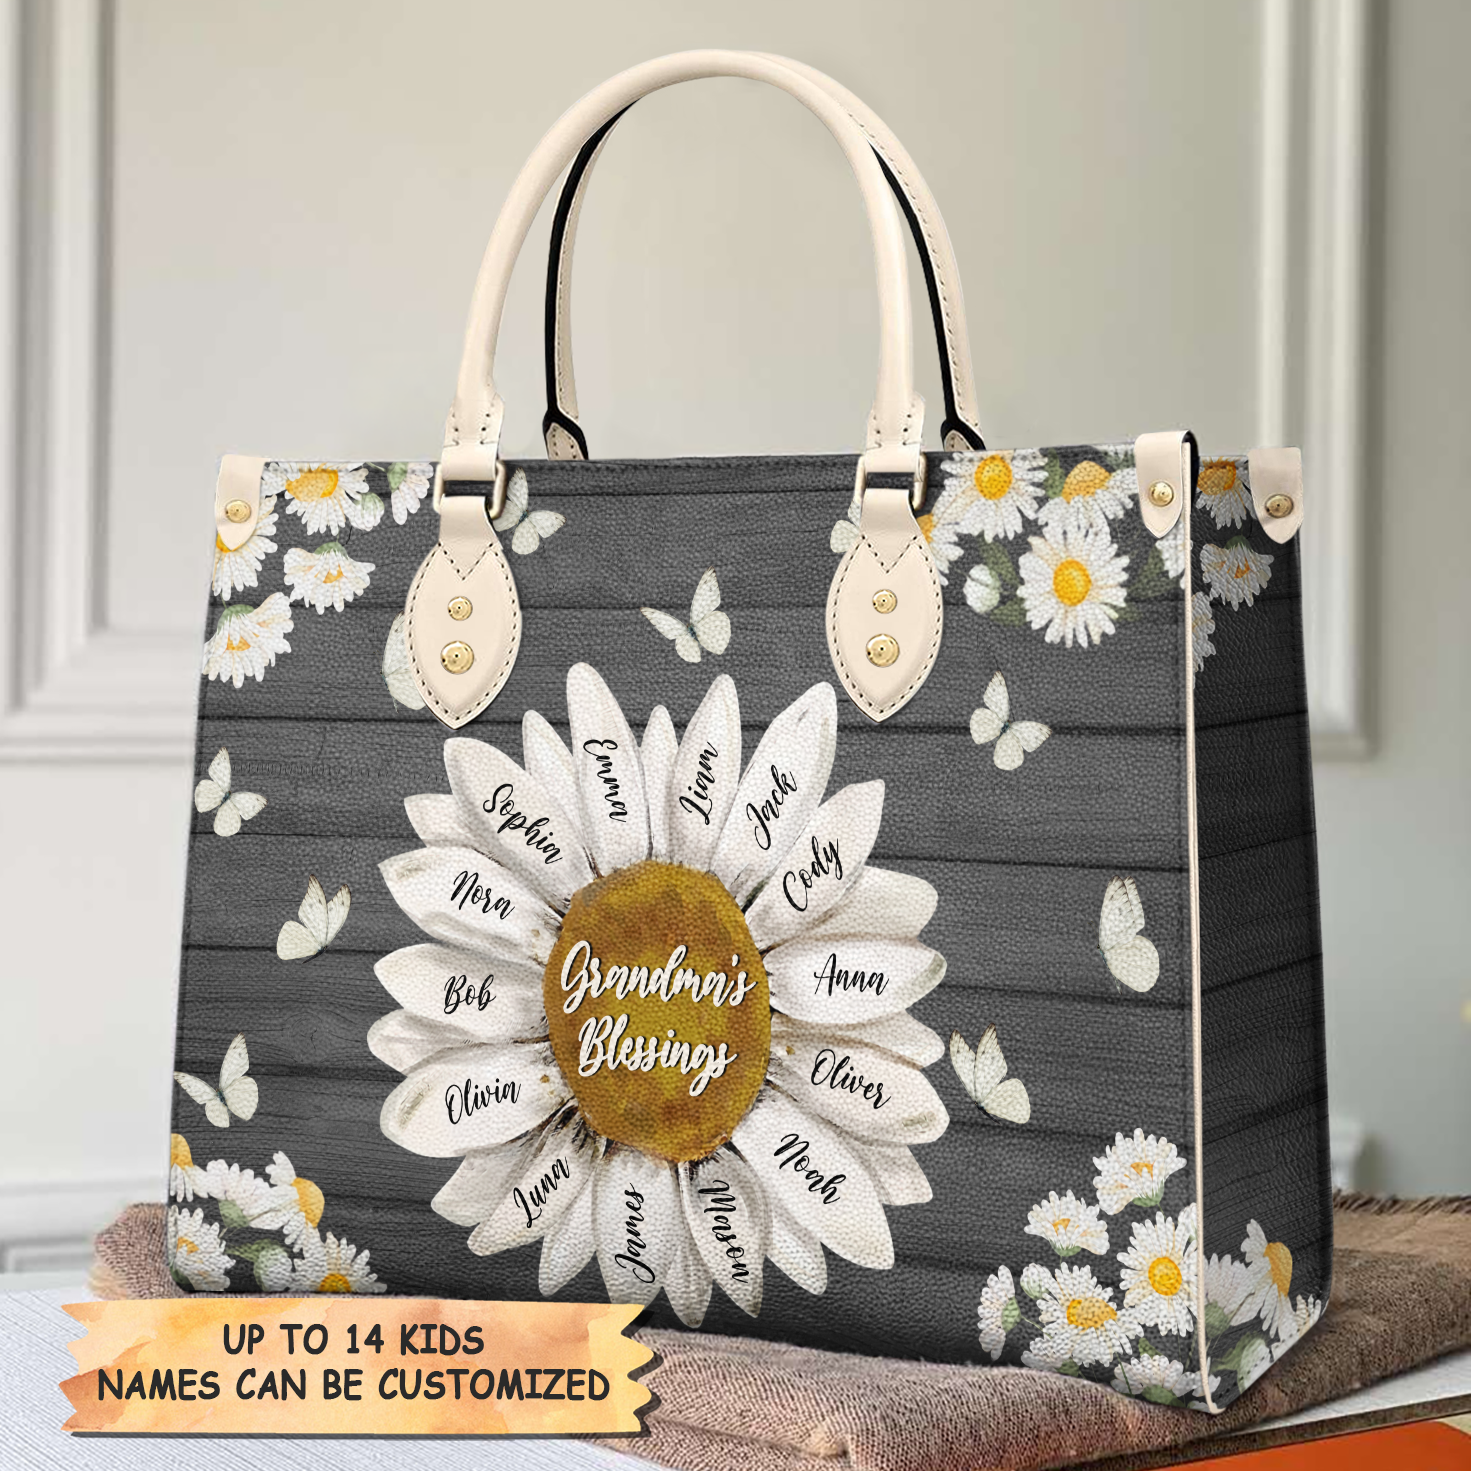 Personalized Leather Bag - Gift For Grandma - Grandma's Blessings